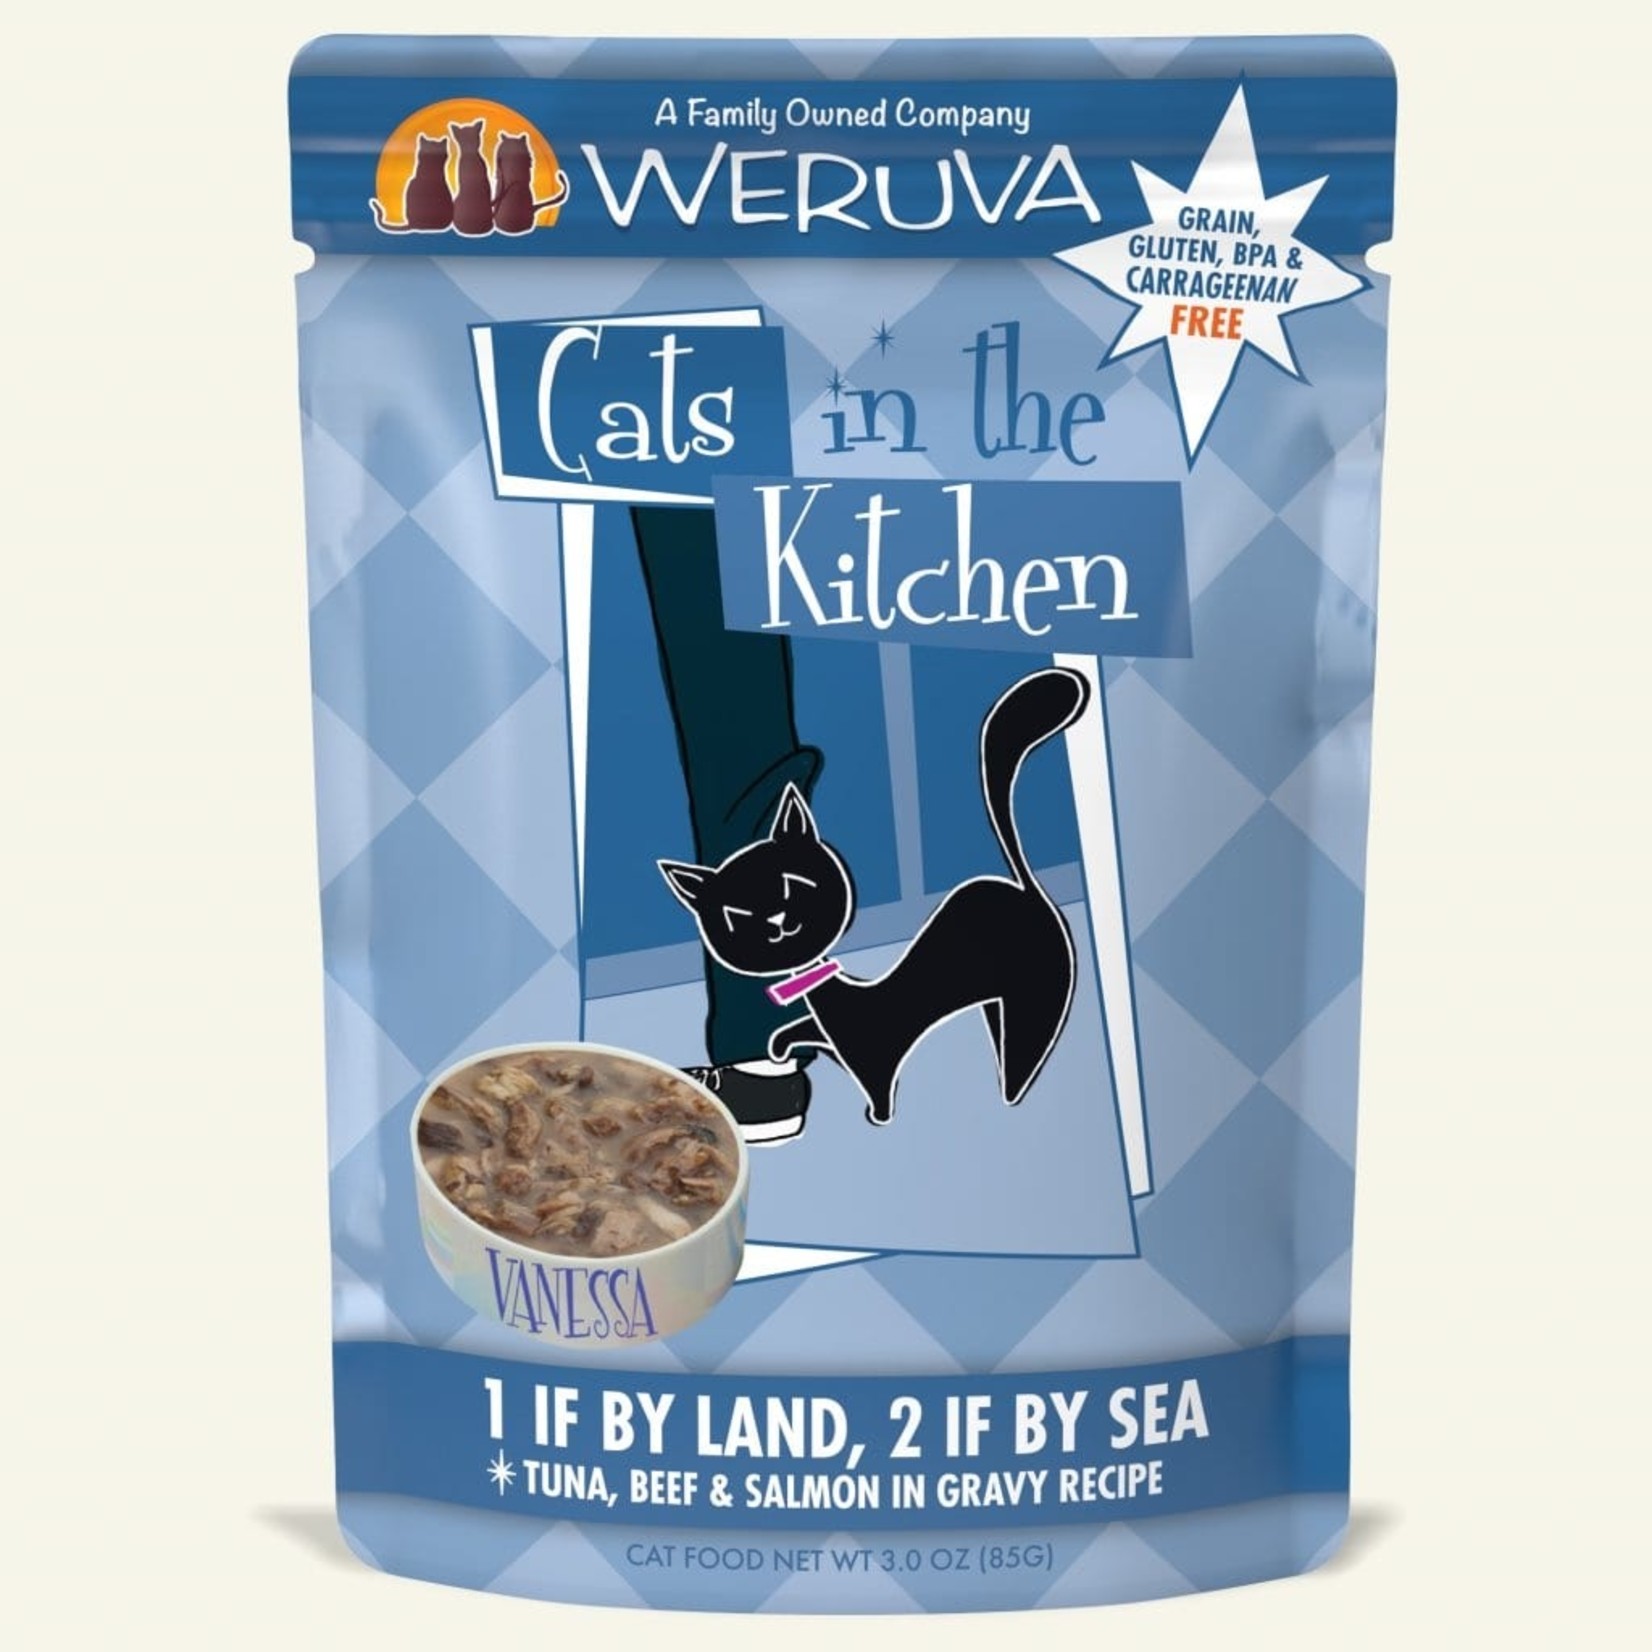 Weruva Weruva Cats in the Kitchen Wet Cat Food 1 if By Land, 2 if By Sea Tuna, Beef & Salmon in Gravy 3oz Pouch